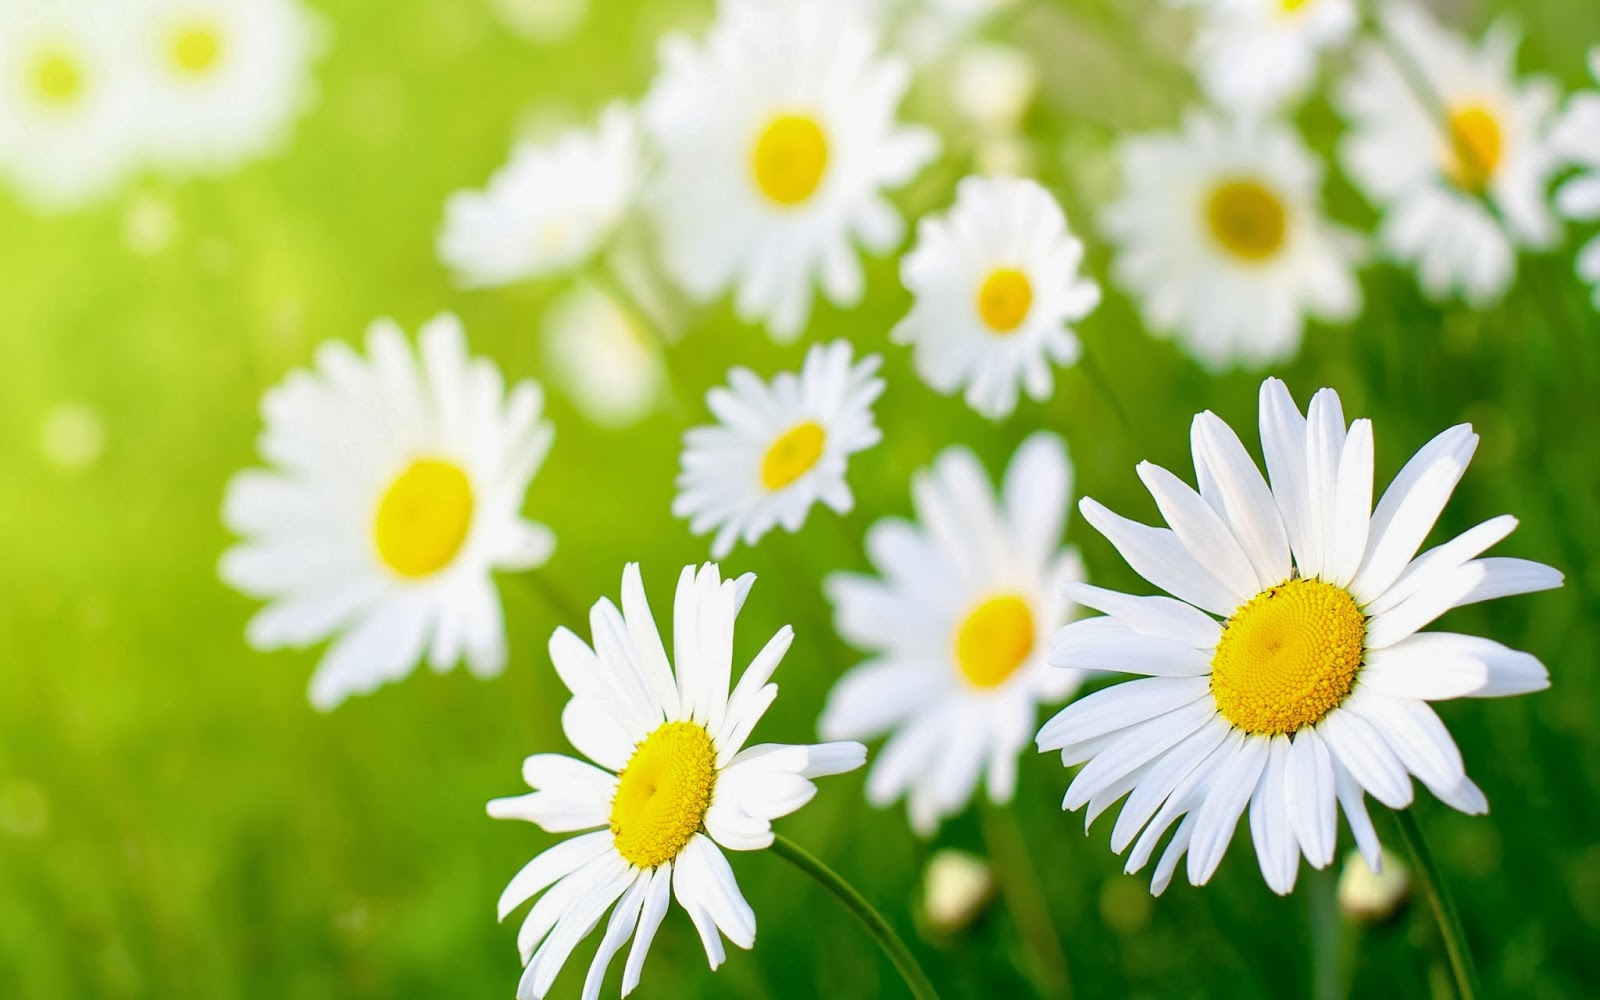  flower wallpaper and make this Daisy flower wallpaper for your desktop